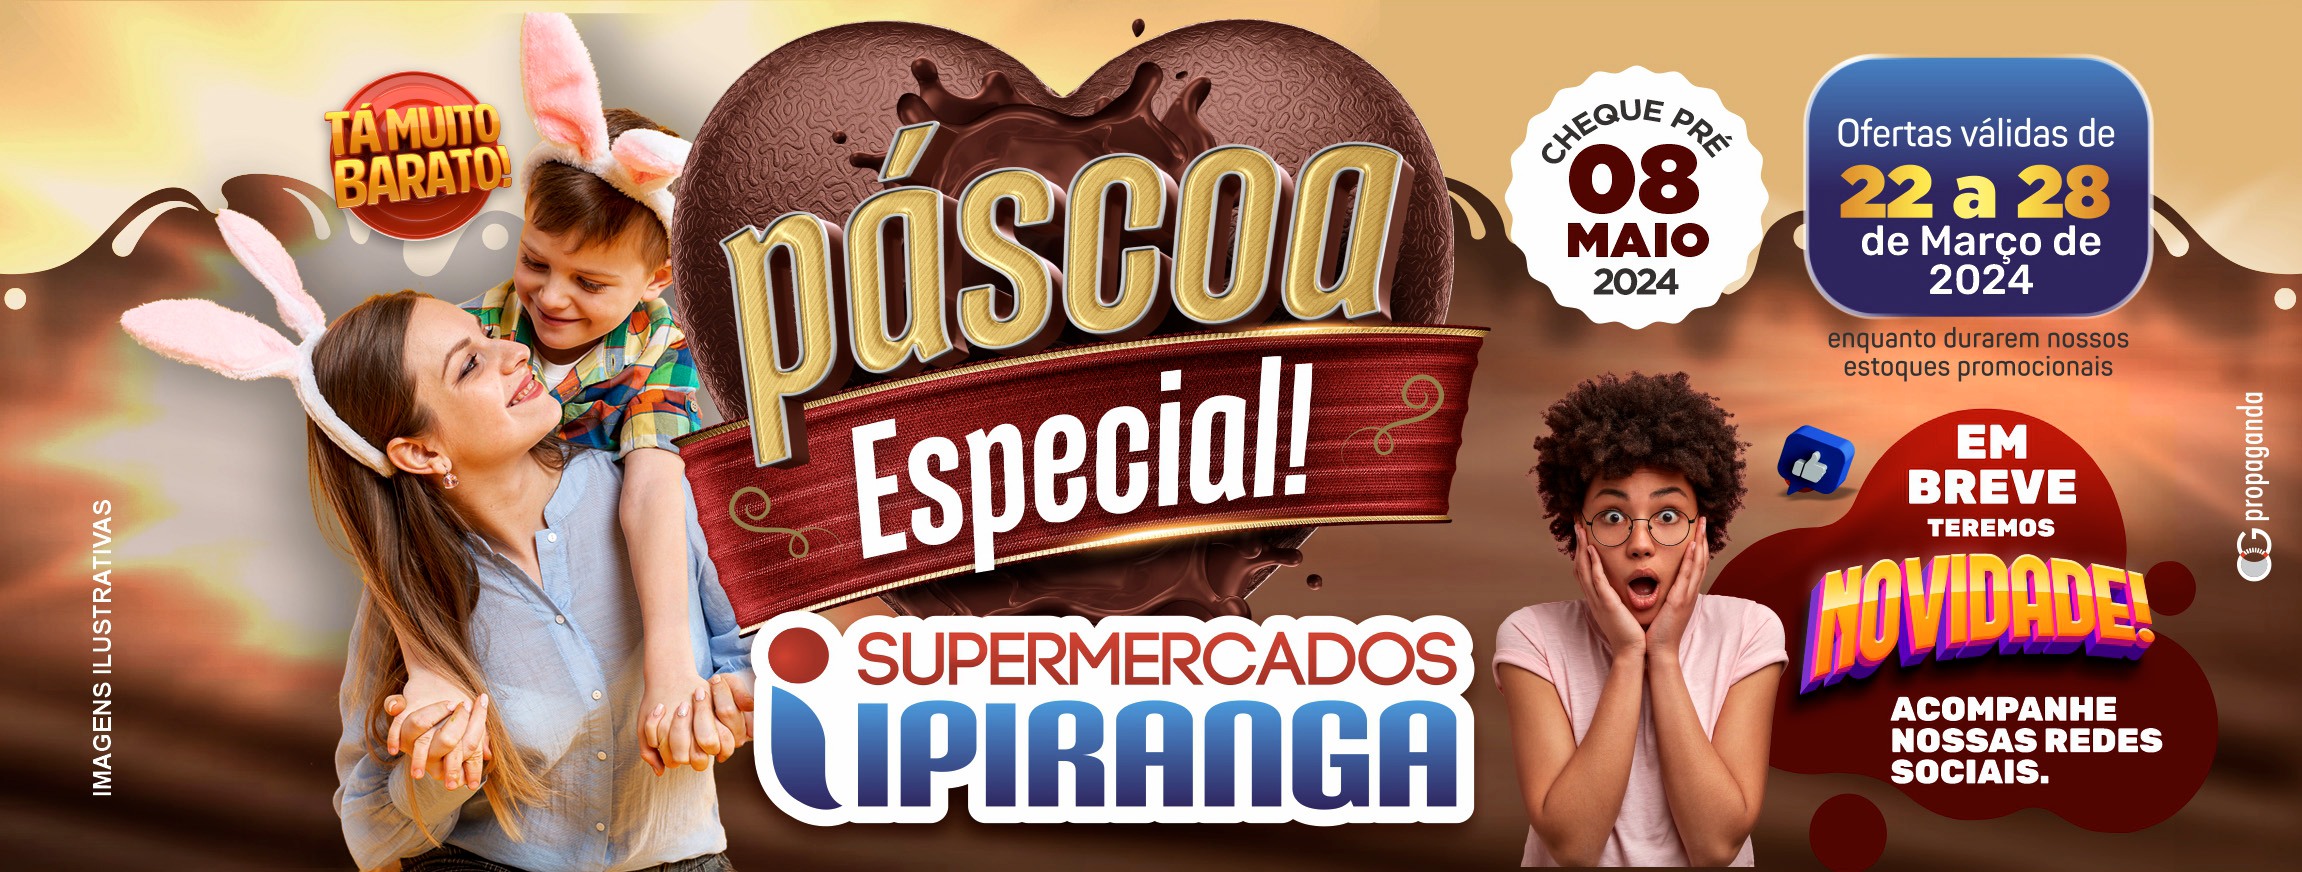 Supermercados Ipiranga